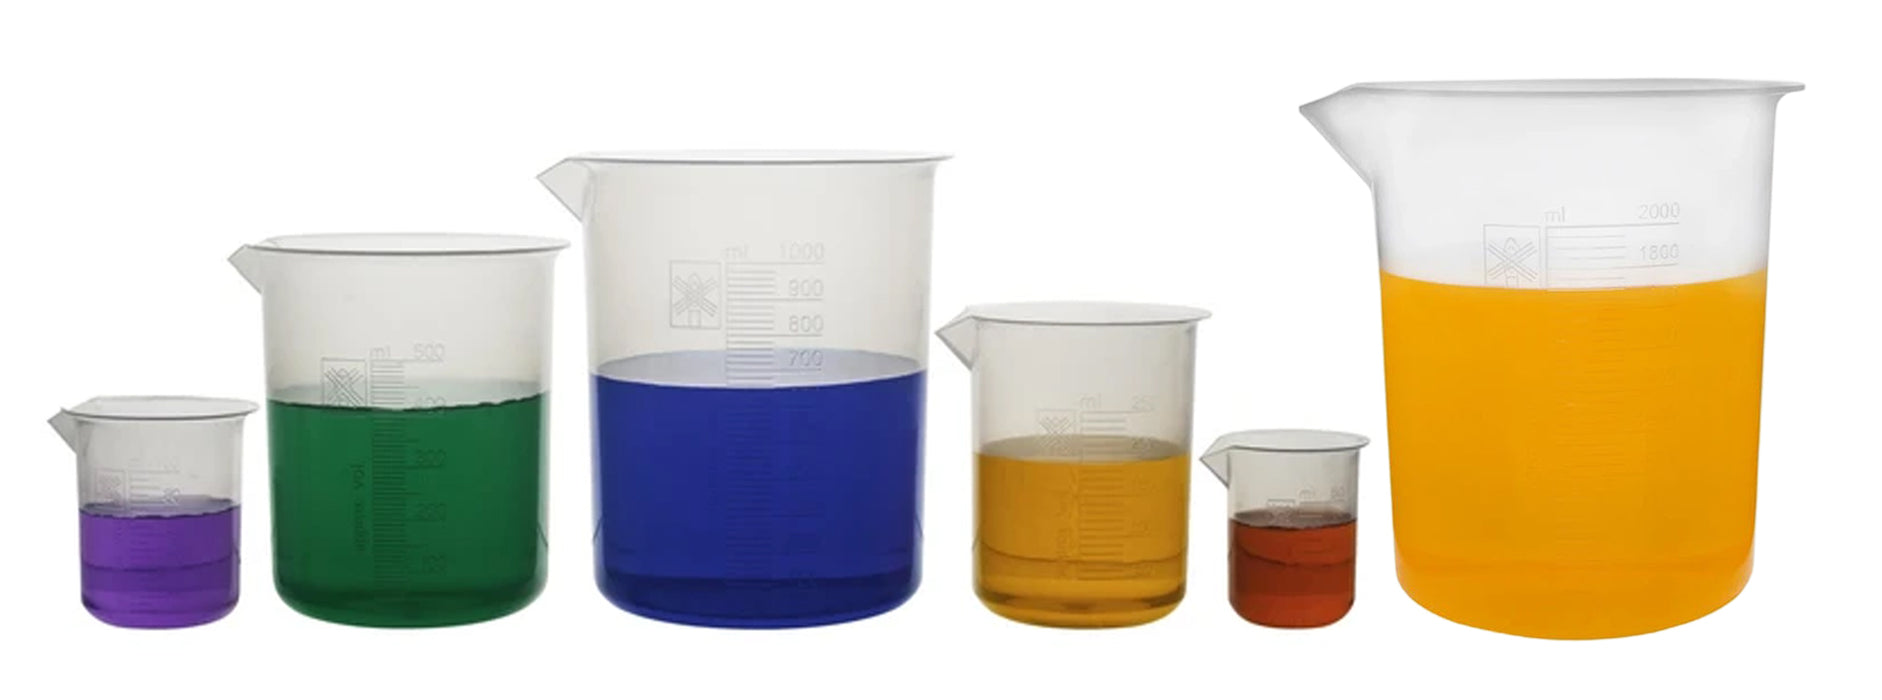 6 Piece Beaker Set, Polypropylene - 50ml, 100ml, 250ml, 500ml, 1000ml & 2000ml - Raised Graduations - With Spout